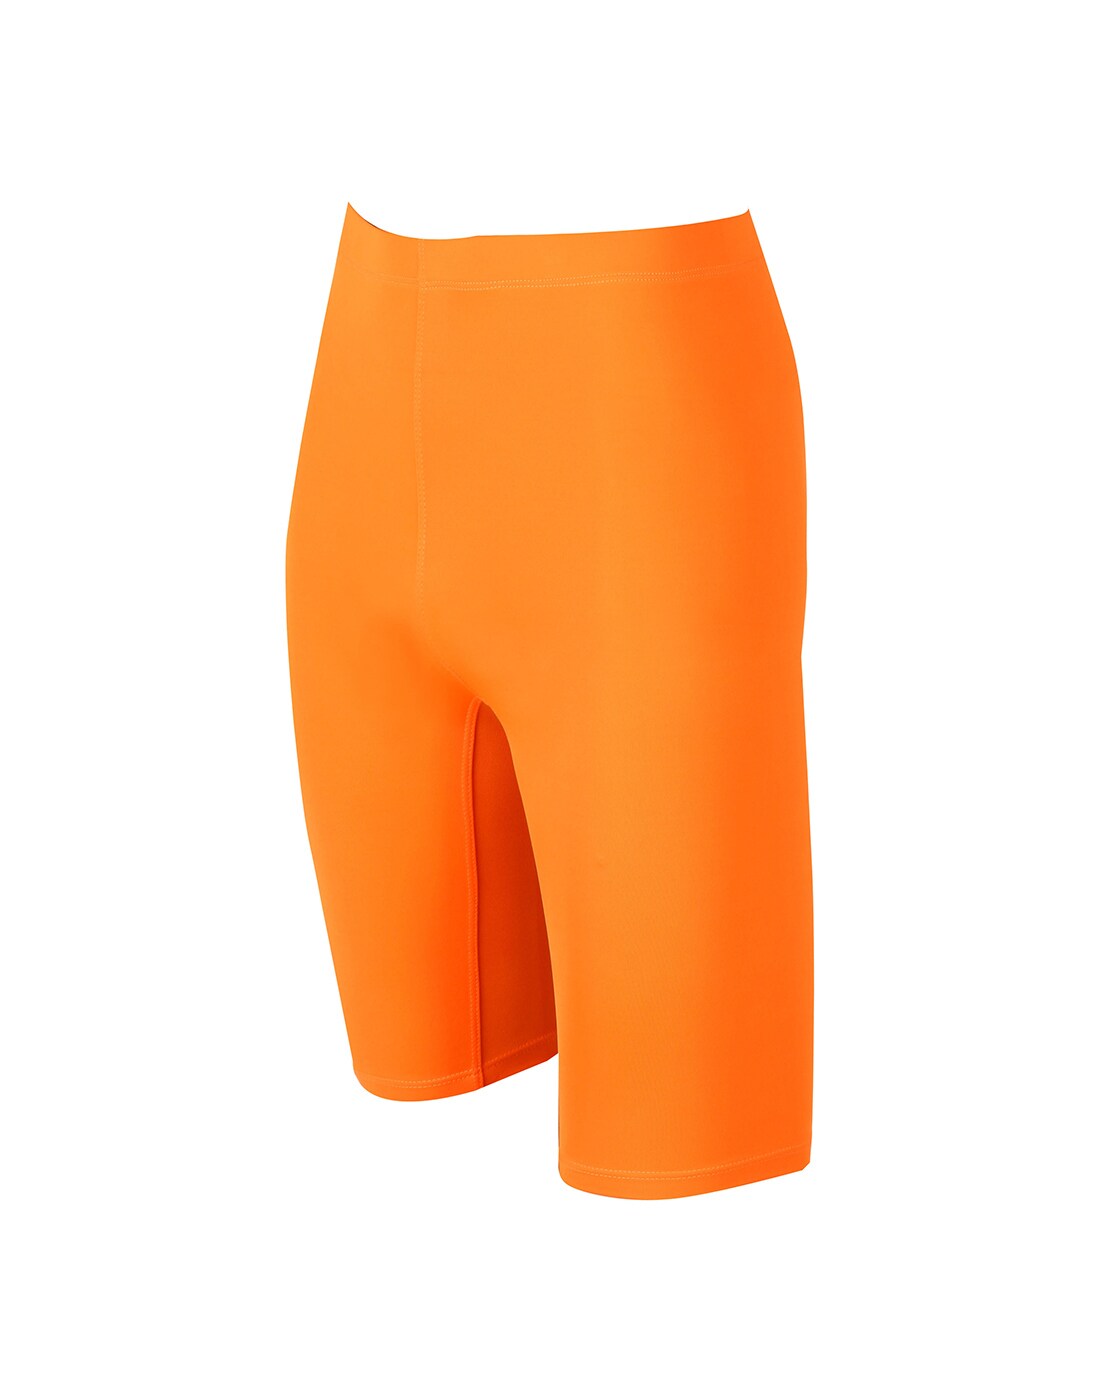 Buy Orange Swimwear for Men by LYCOT Online Ajio